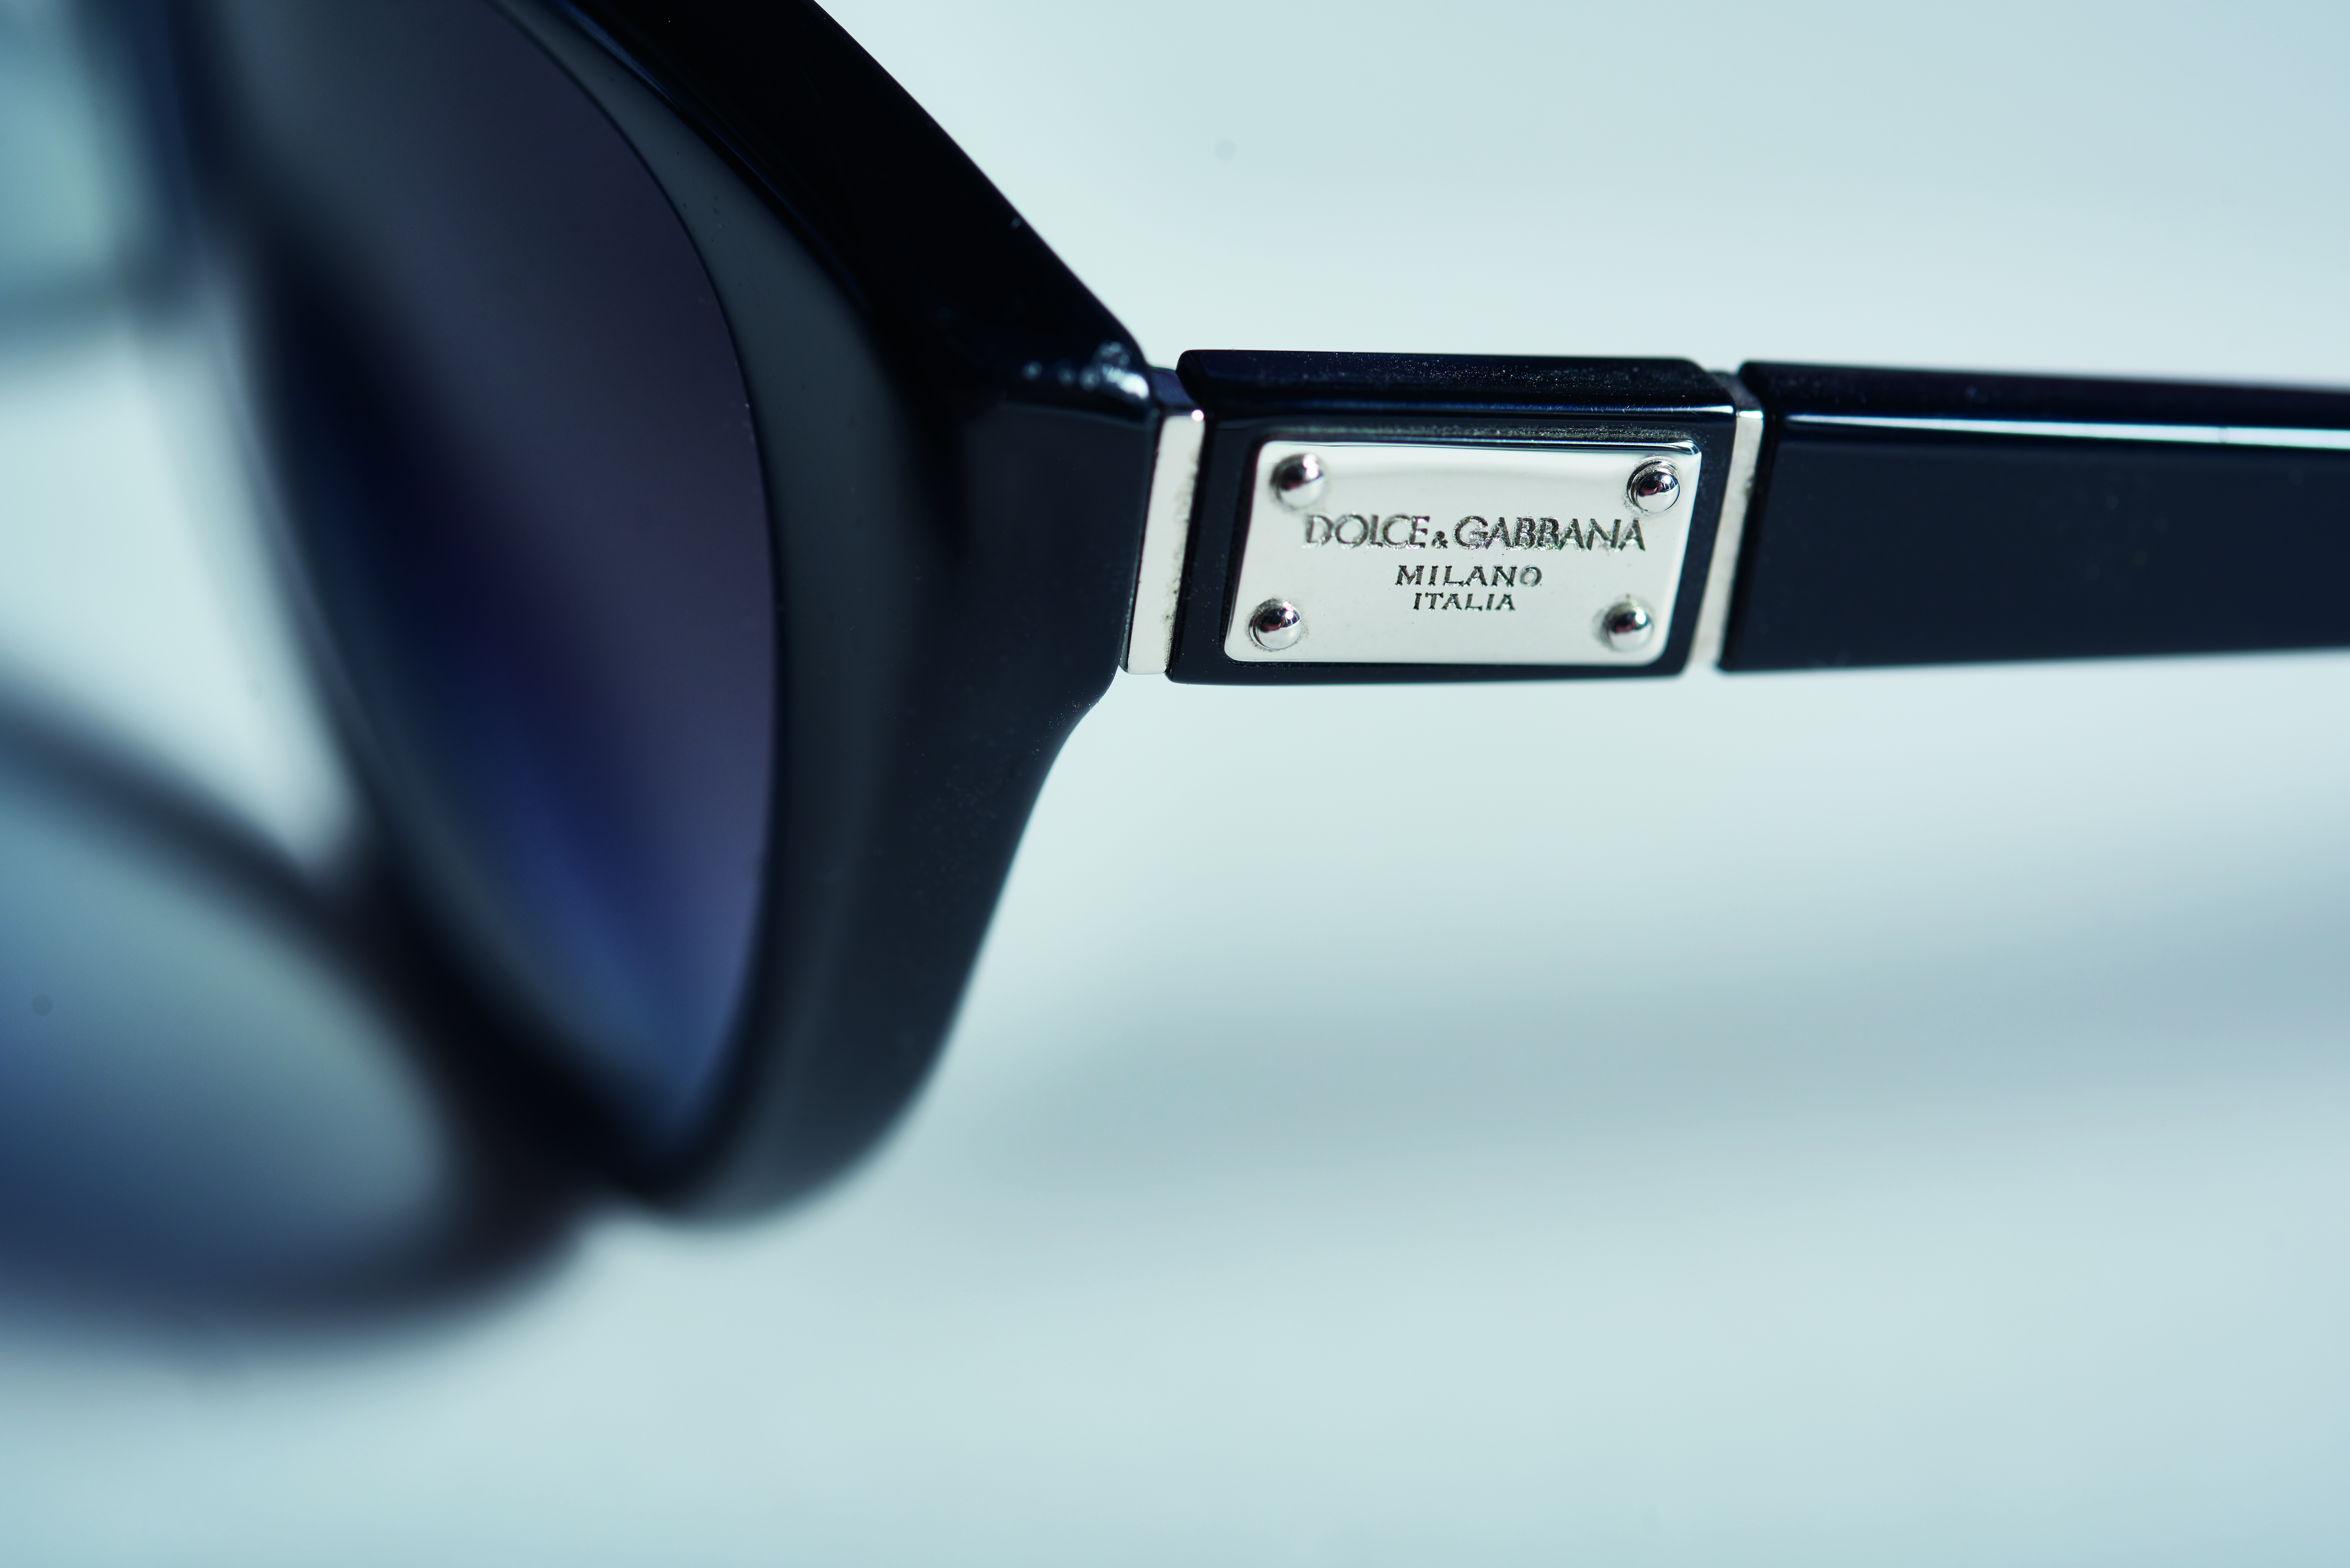 Fake Check: Dolce & Gabbana sunglasses